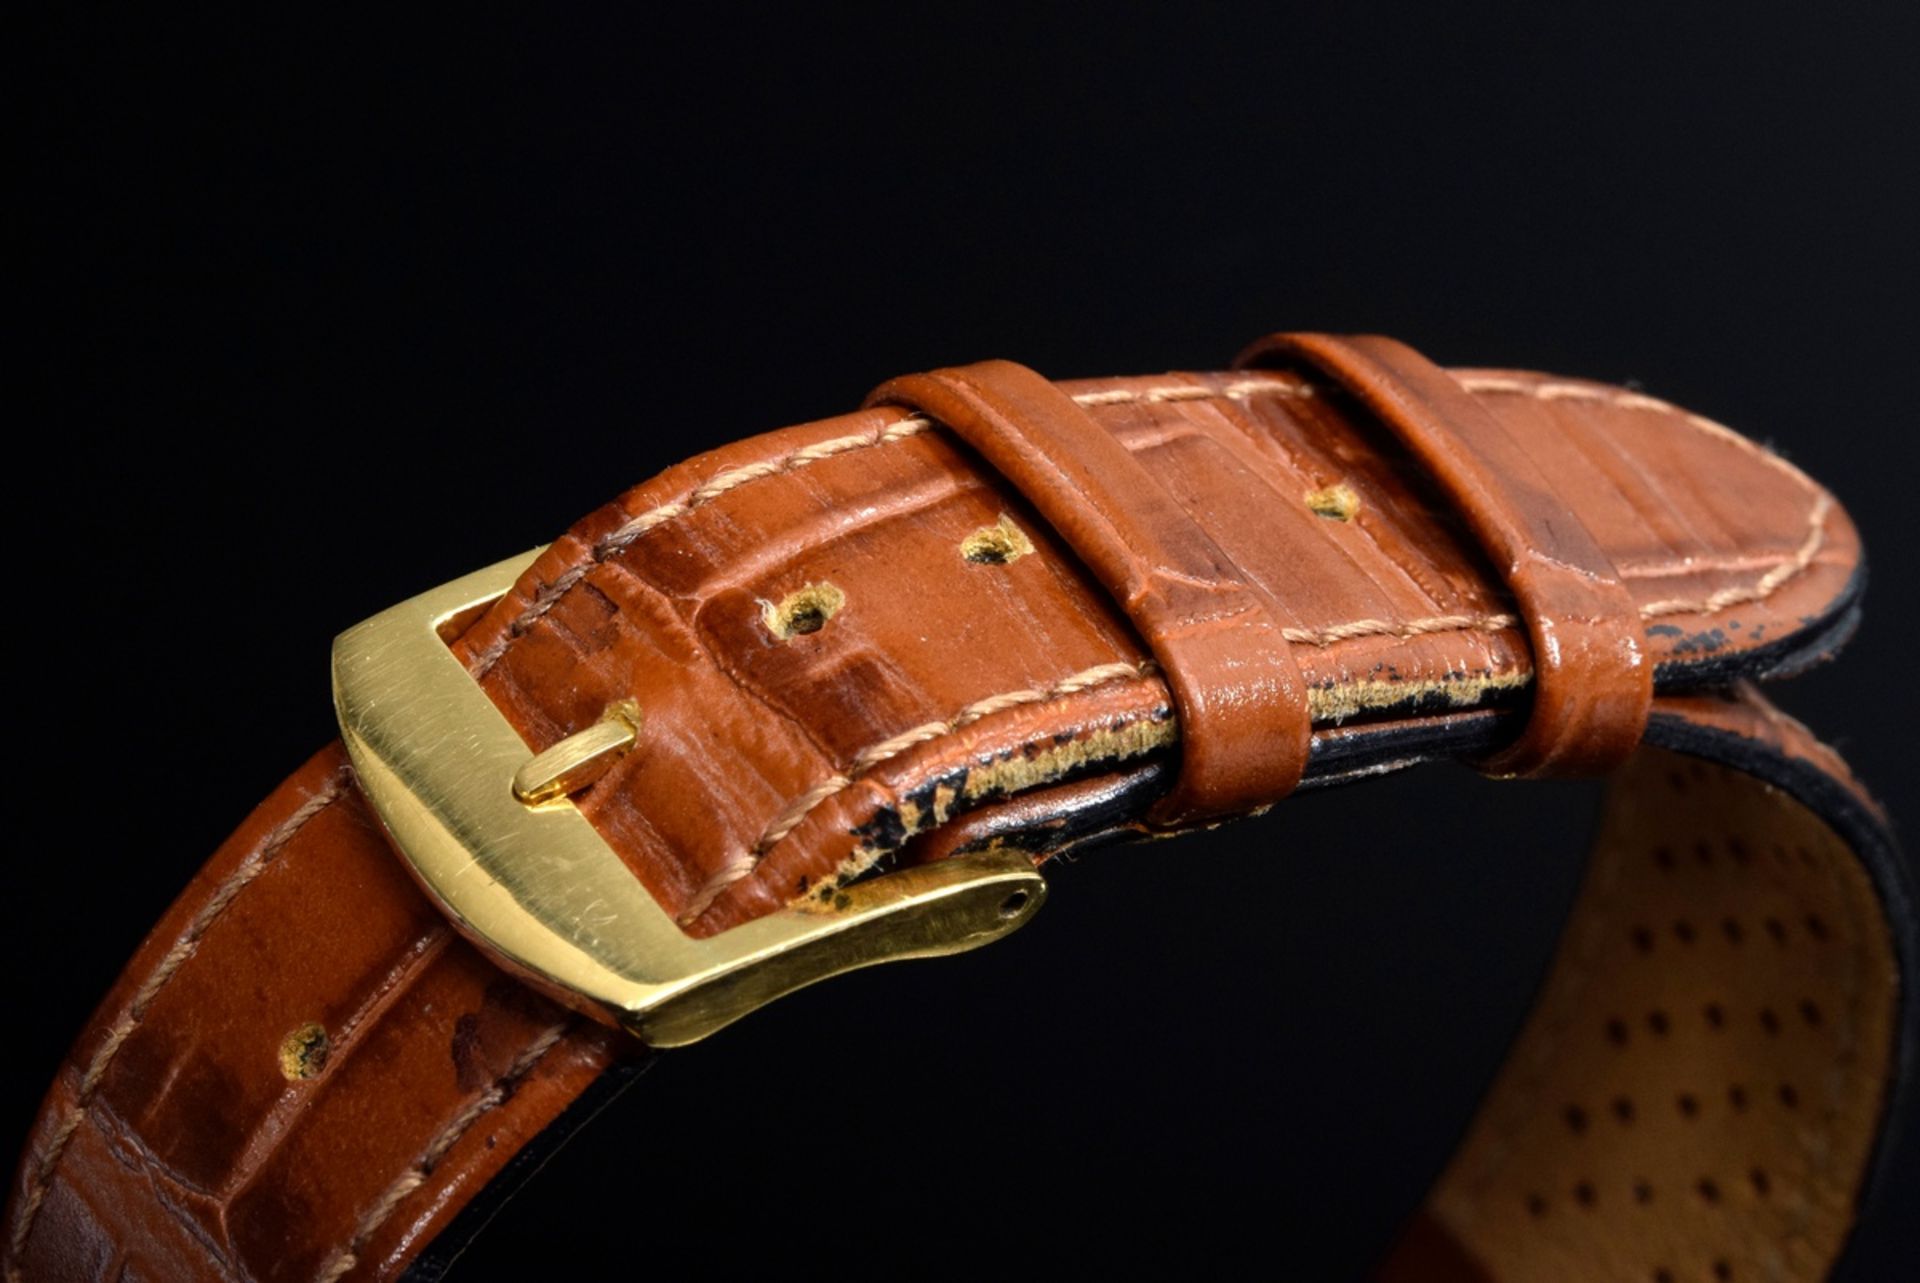 GG 750 Eterna Matic "3000 Beyer" Armbanduhr mit | GG 750 Eterna Matic "3000 Beyer" wristwatch with - Image 4 of 5